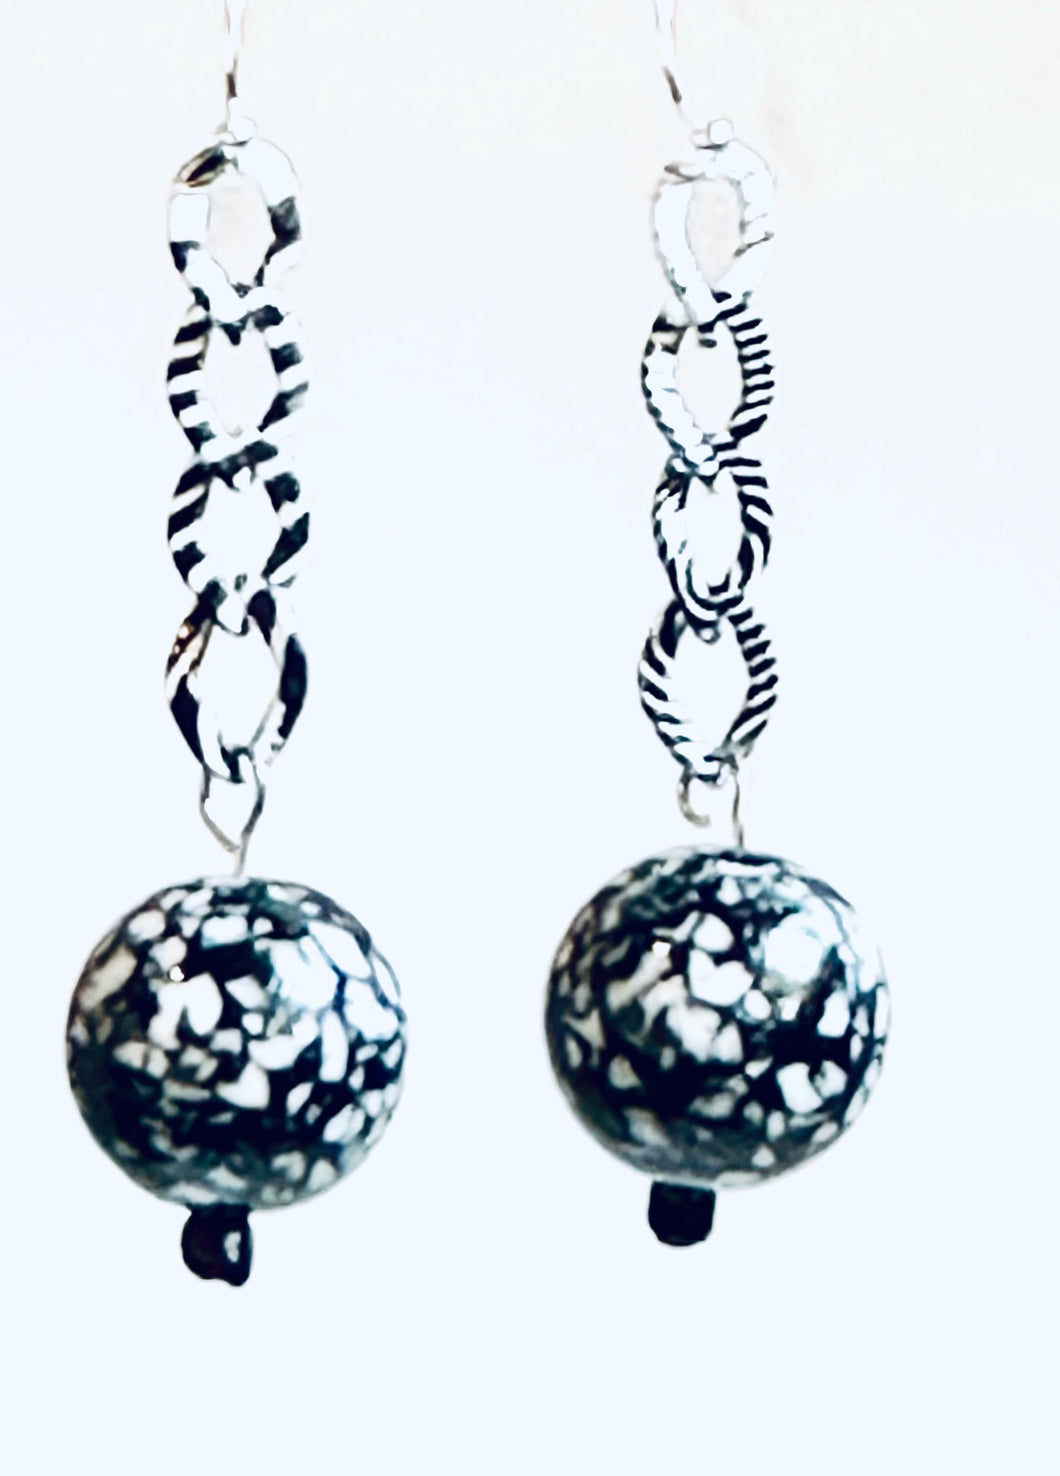 Ball & Chain Earrings